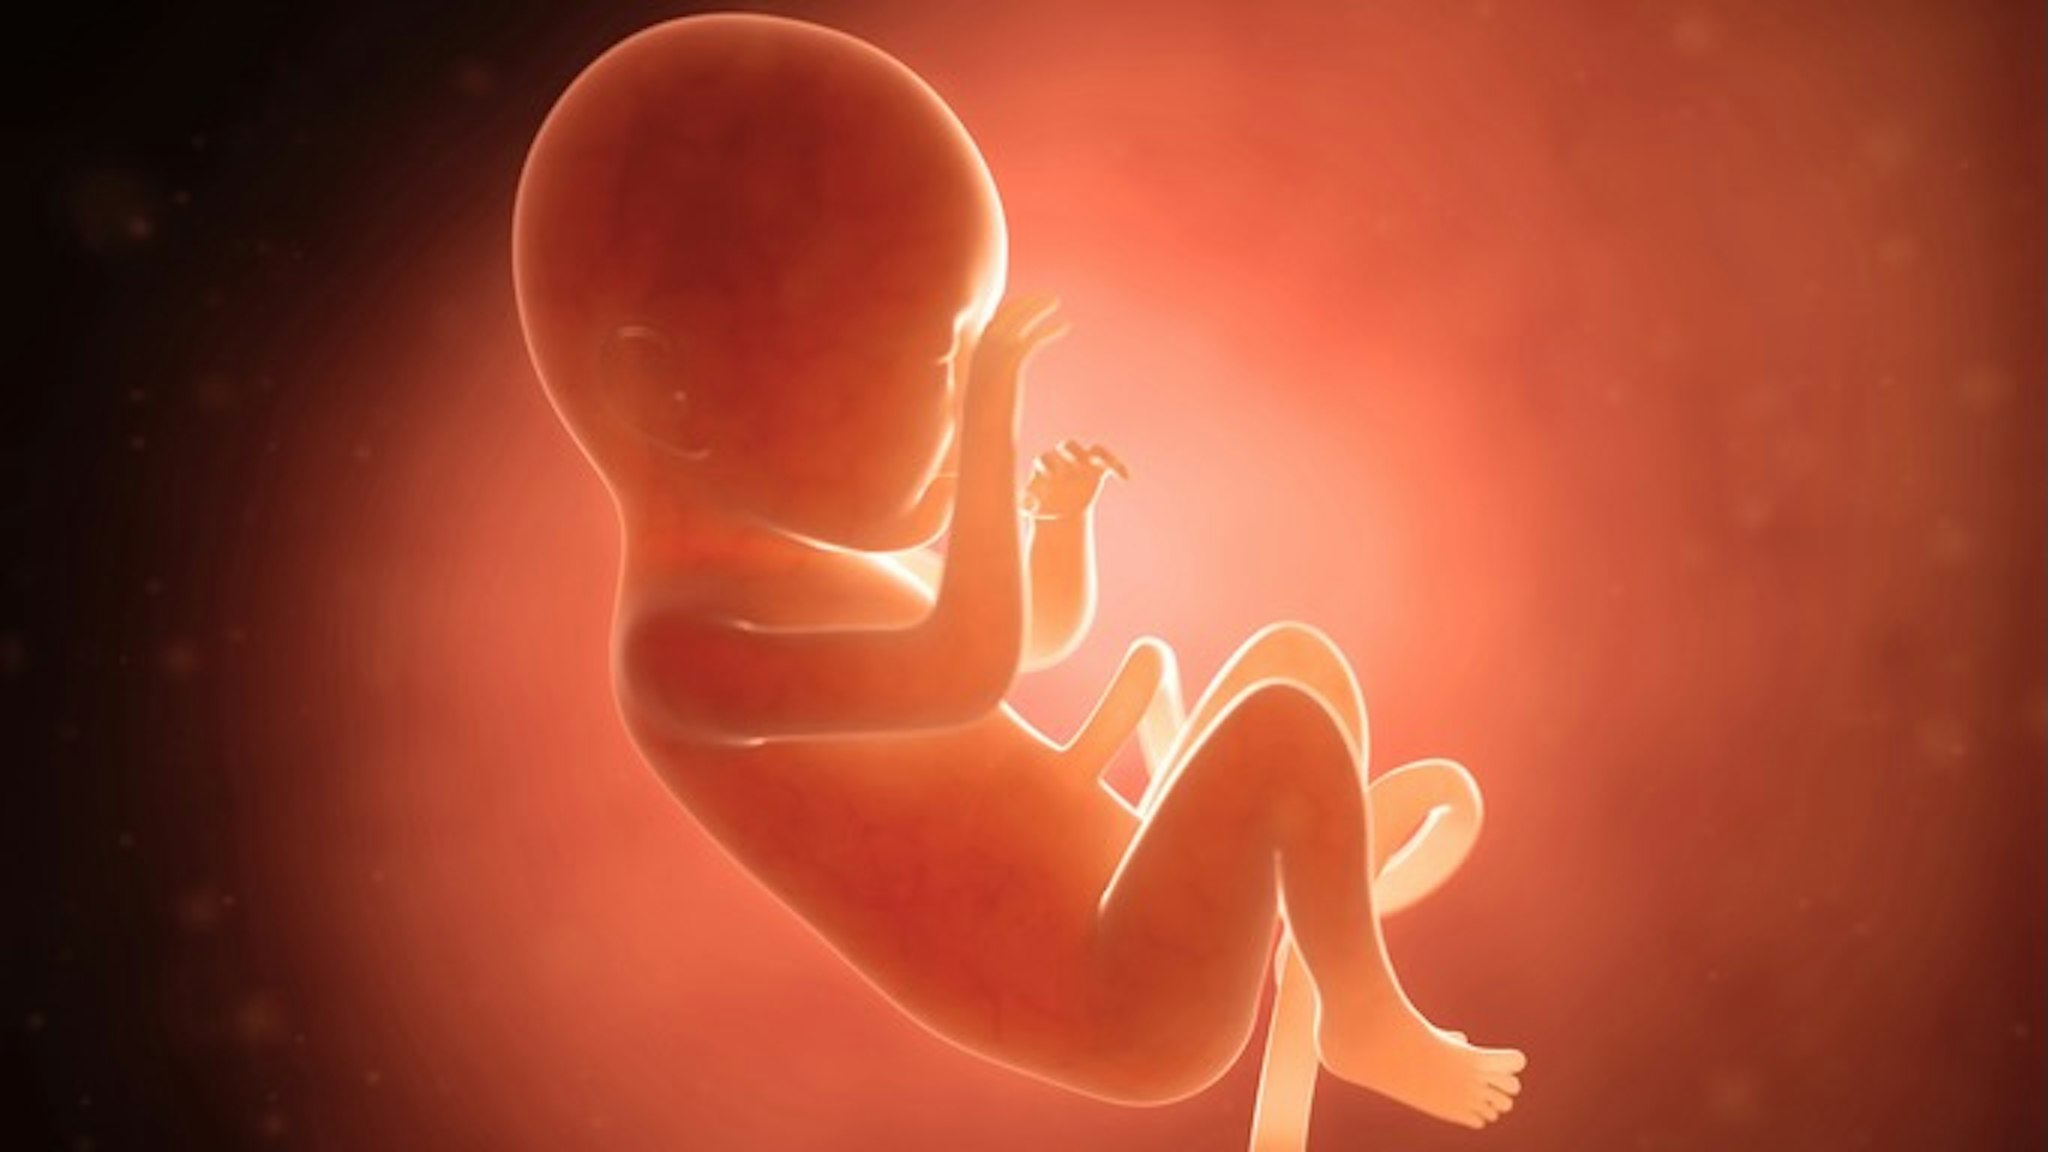 Human fetus at 7 months, illustration - stock illustration Human fetus at 7 months, computer illustration.